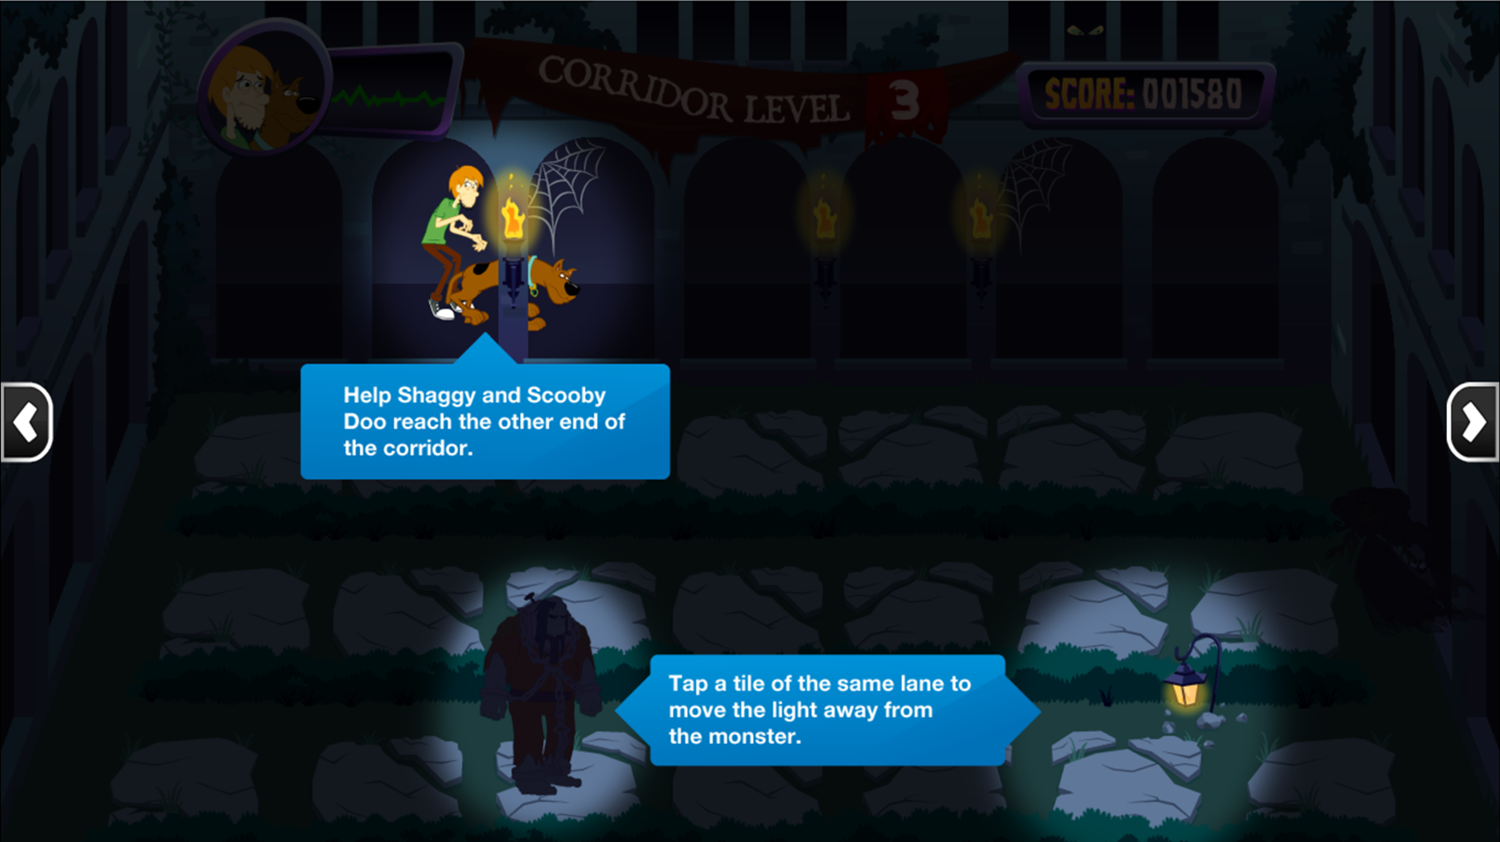 Scooby Doo Creepy Corridors Game Goals Screenshot.